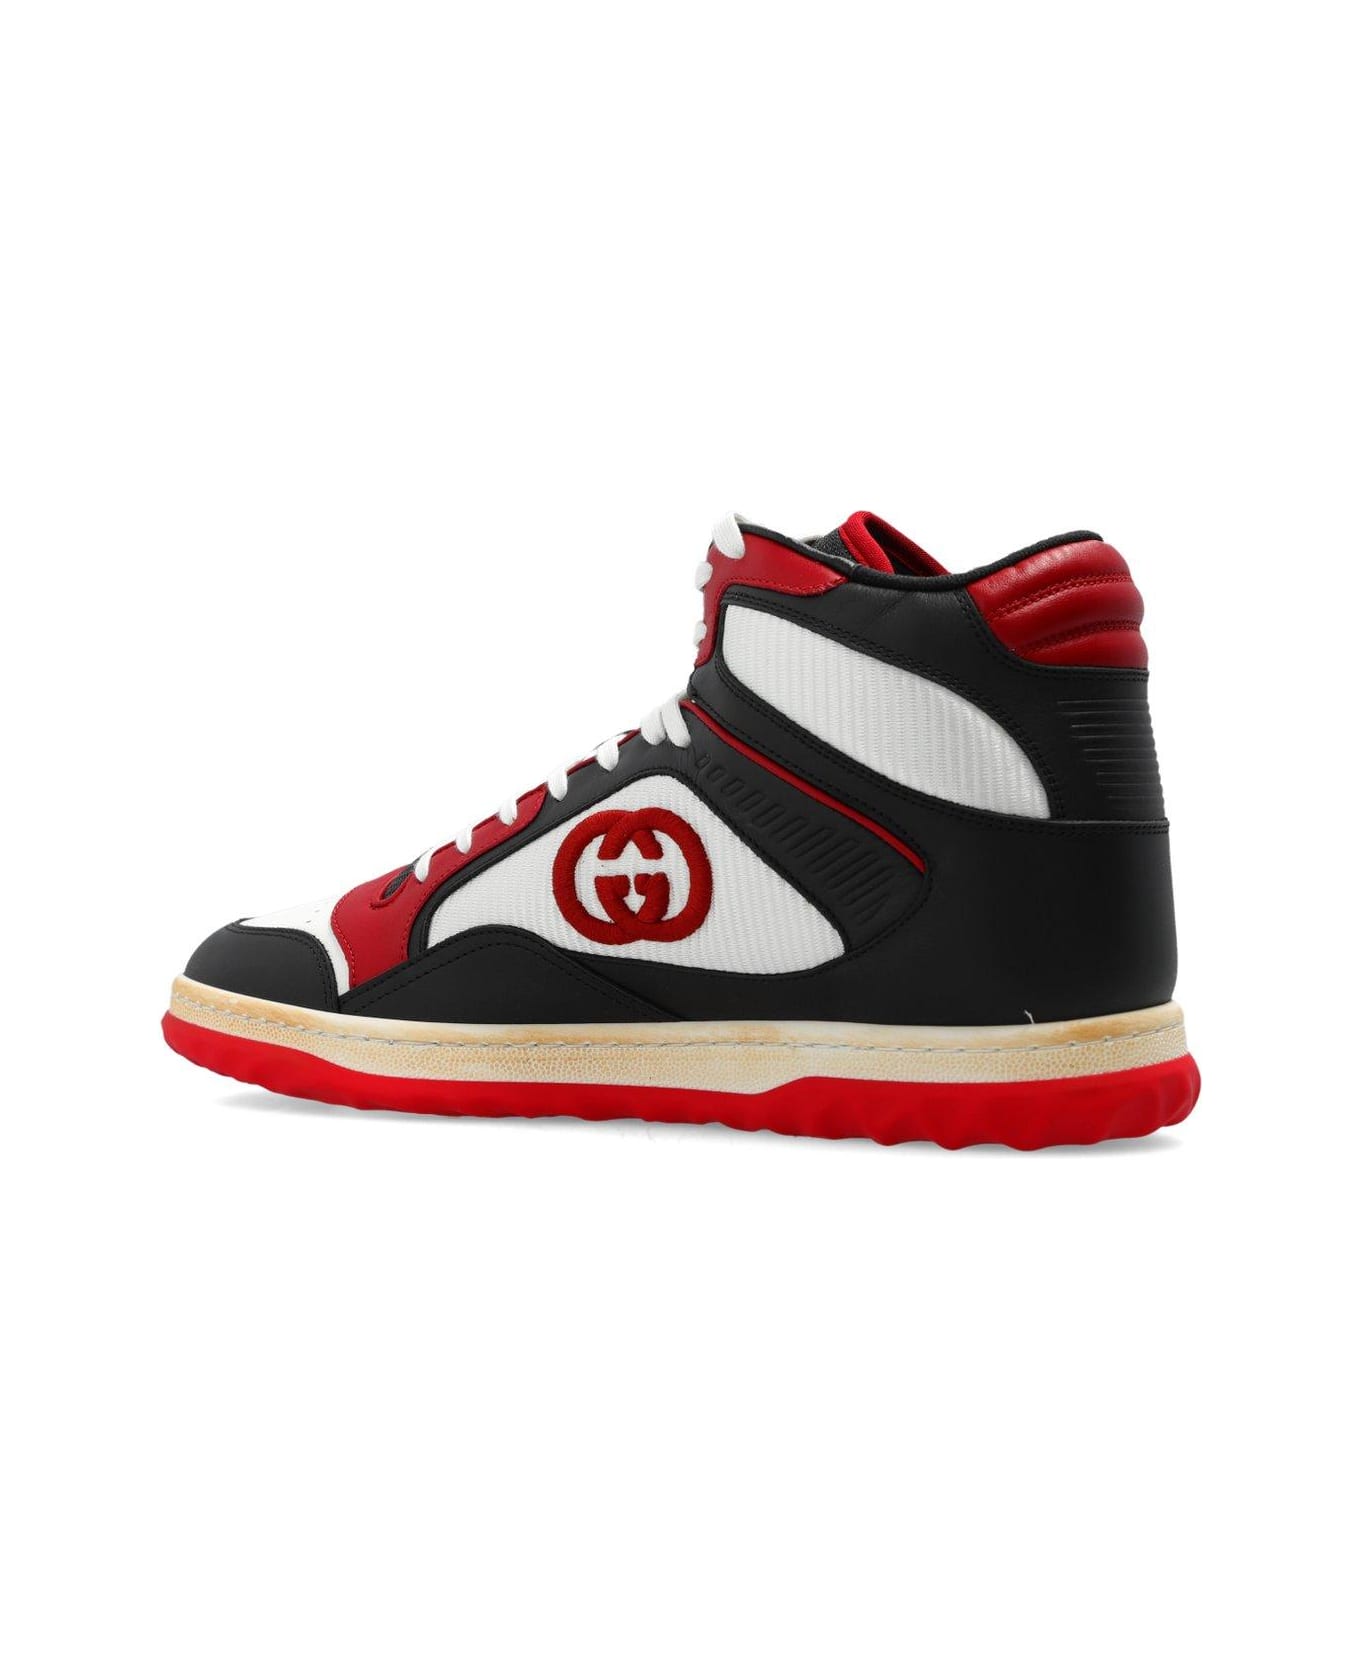 Gucci Panelled High-top Sneakers - BLAOFWHHREDBLA